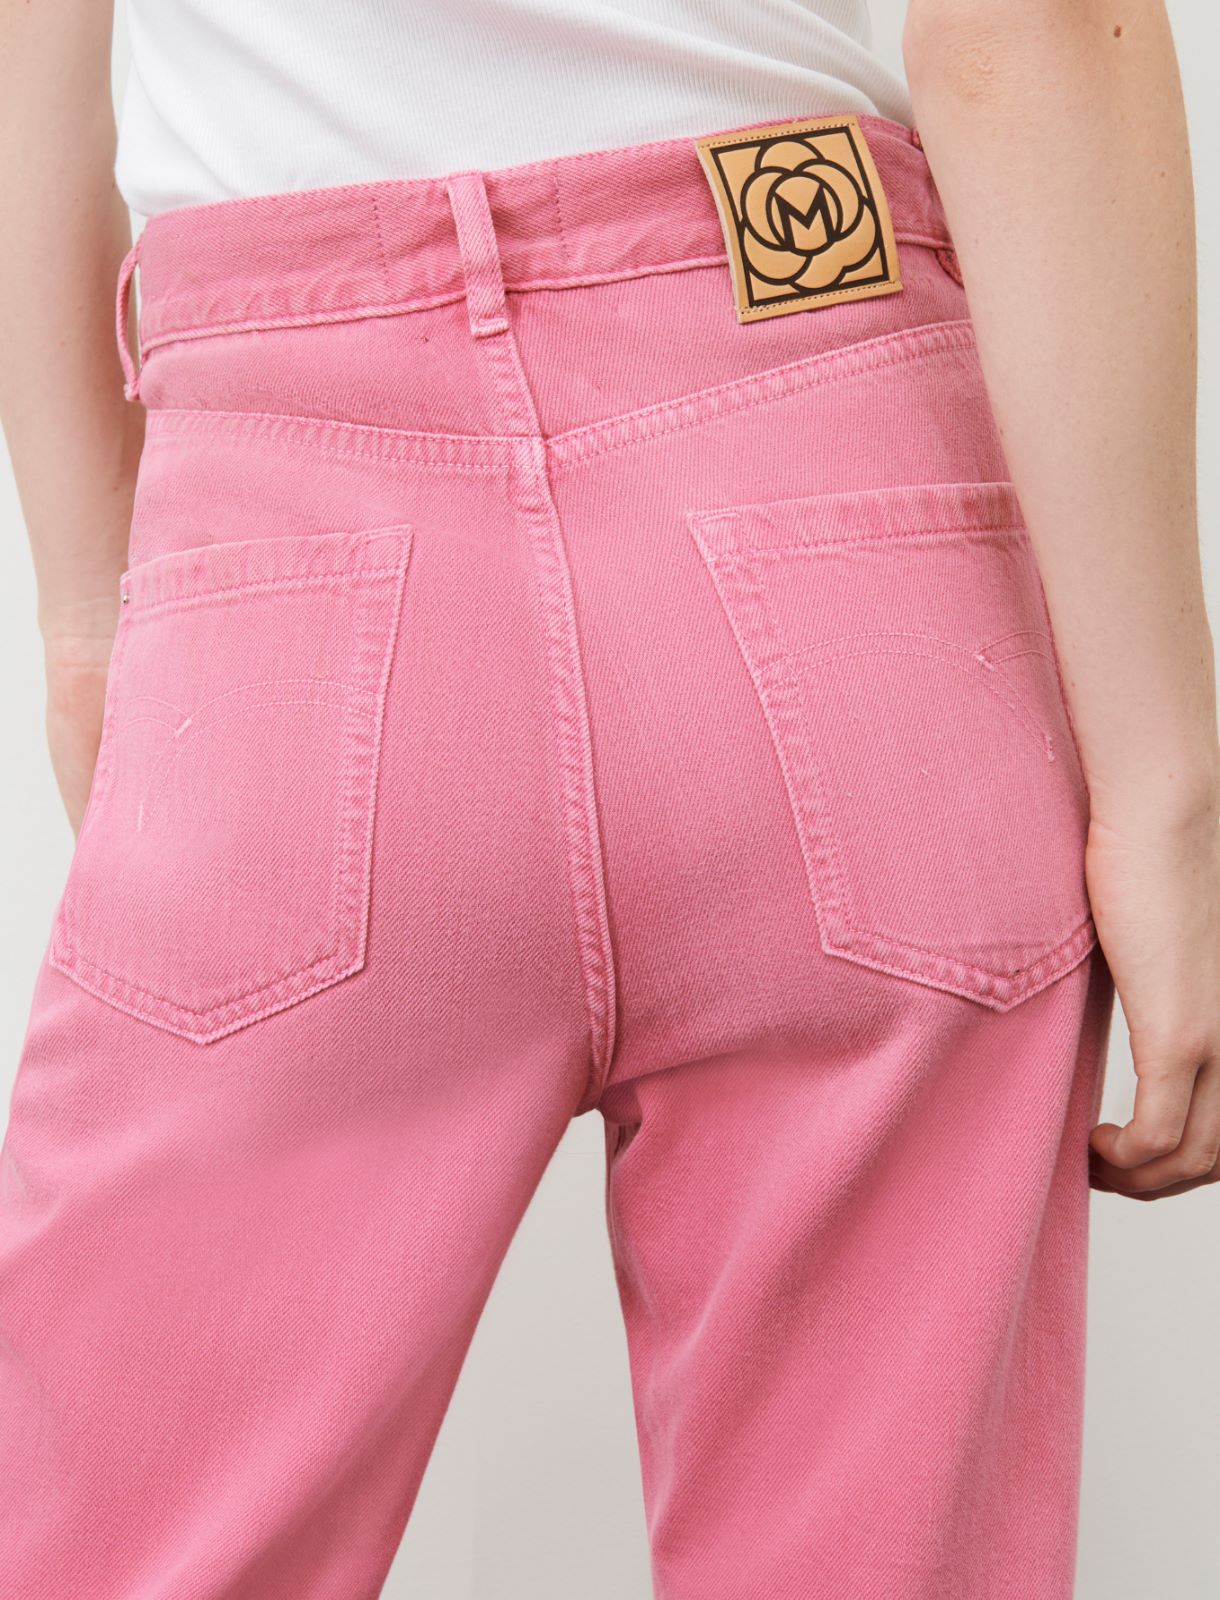 Mom-fit jeans - Shocking pink - Marina Rinaldi - 5